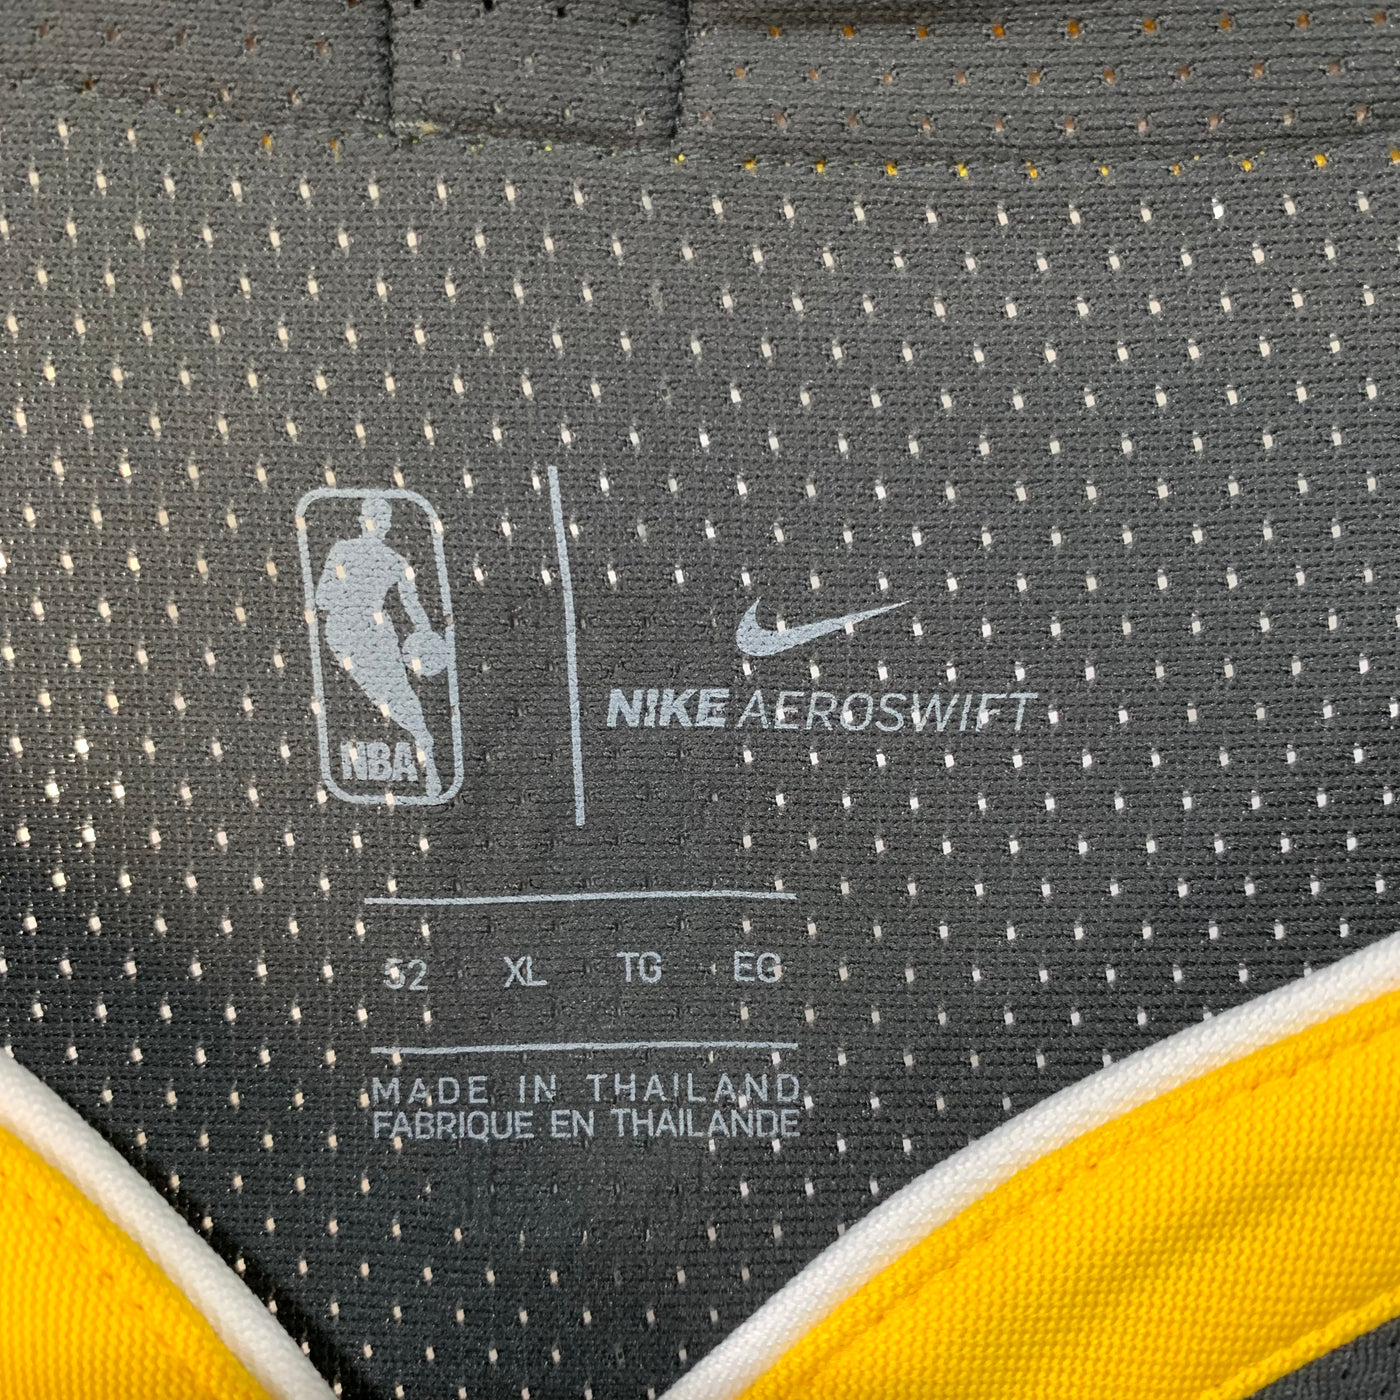 Nike NBA Los Angeles Lakers Aeroswift Blank Basketball Jersey Size 52 XL  for sale online